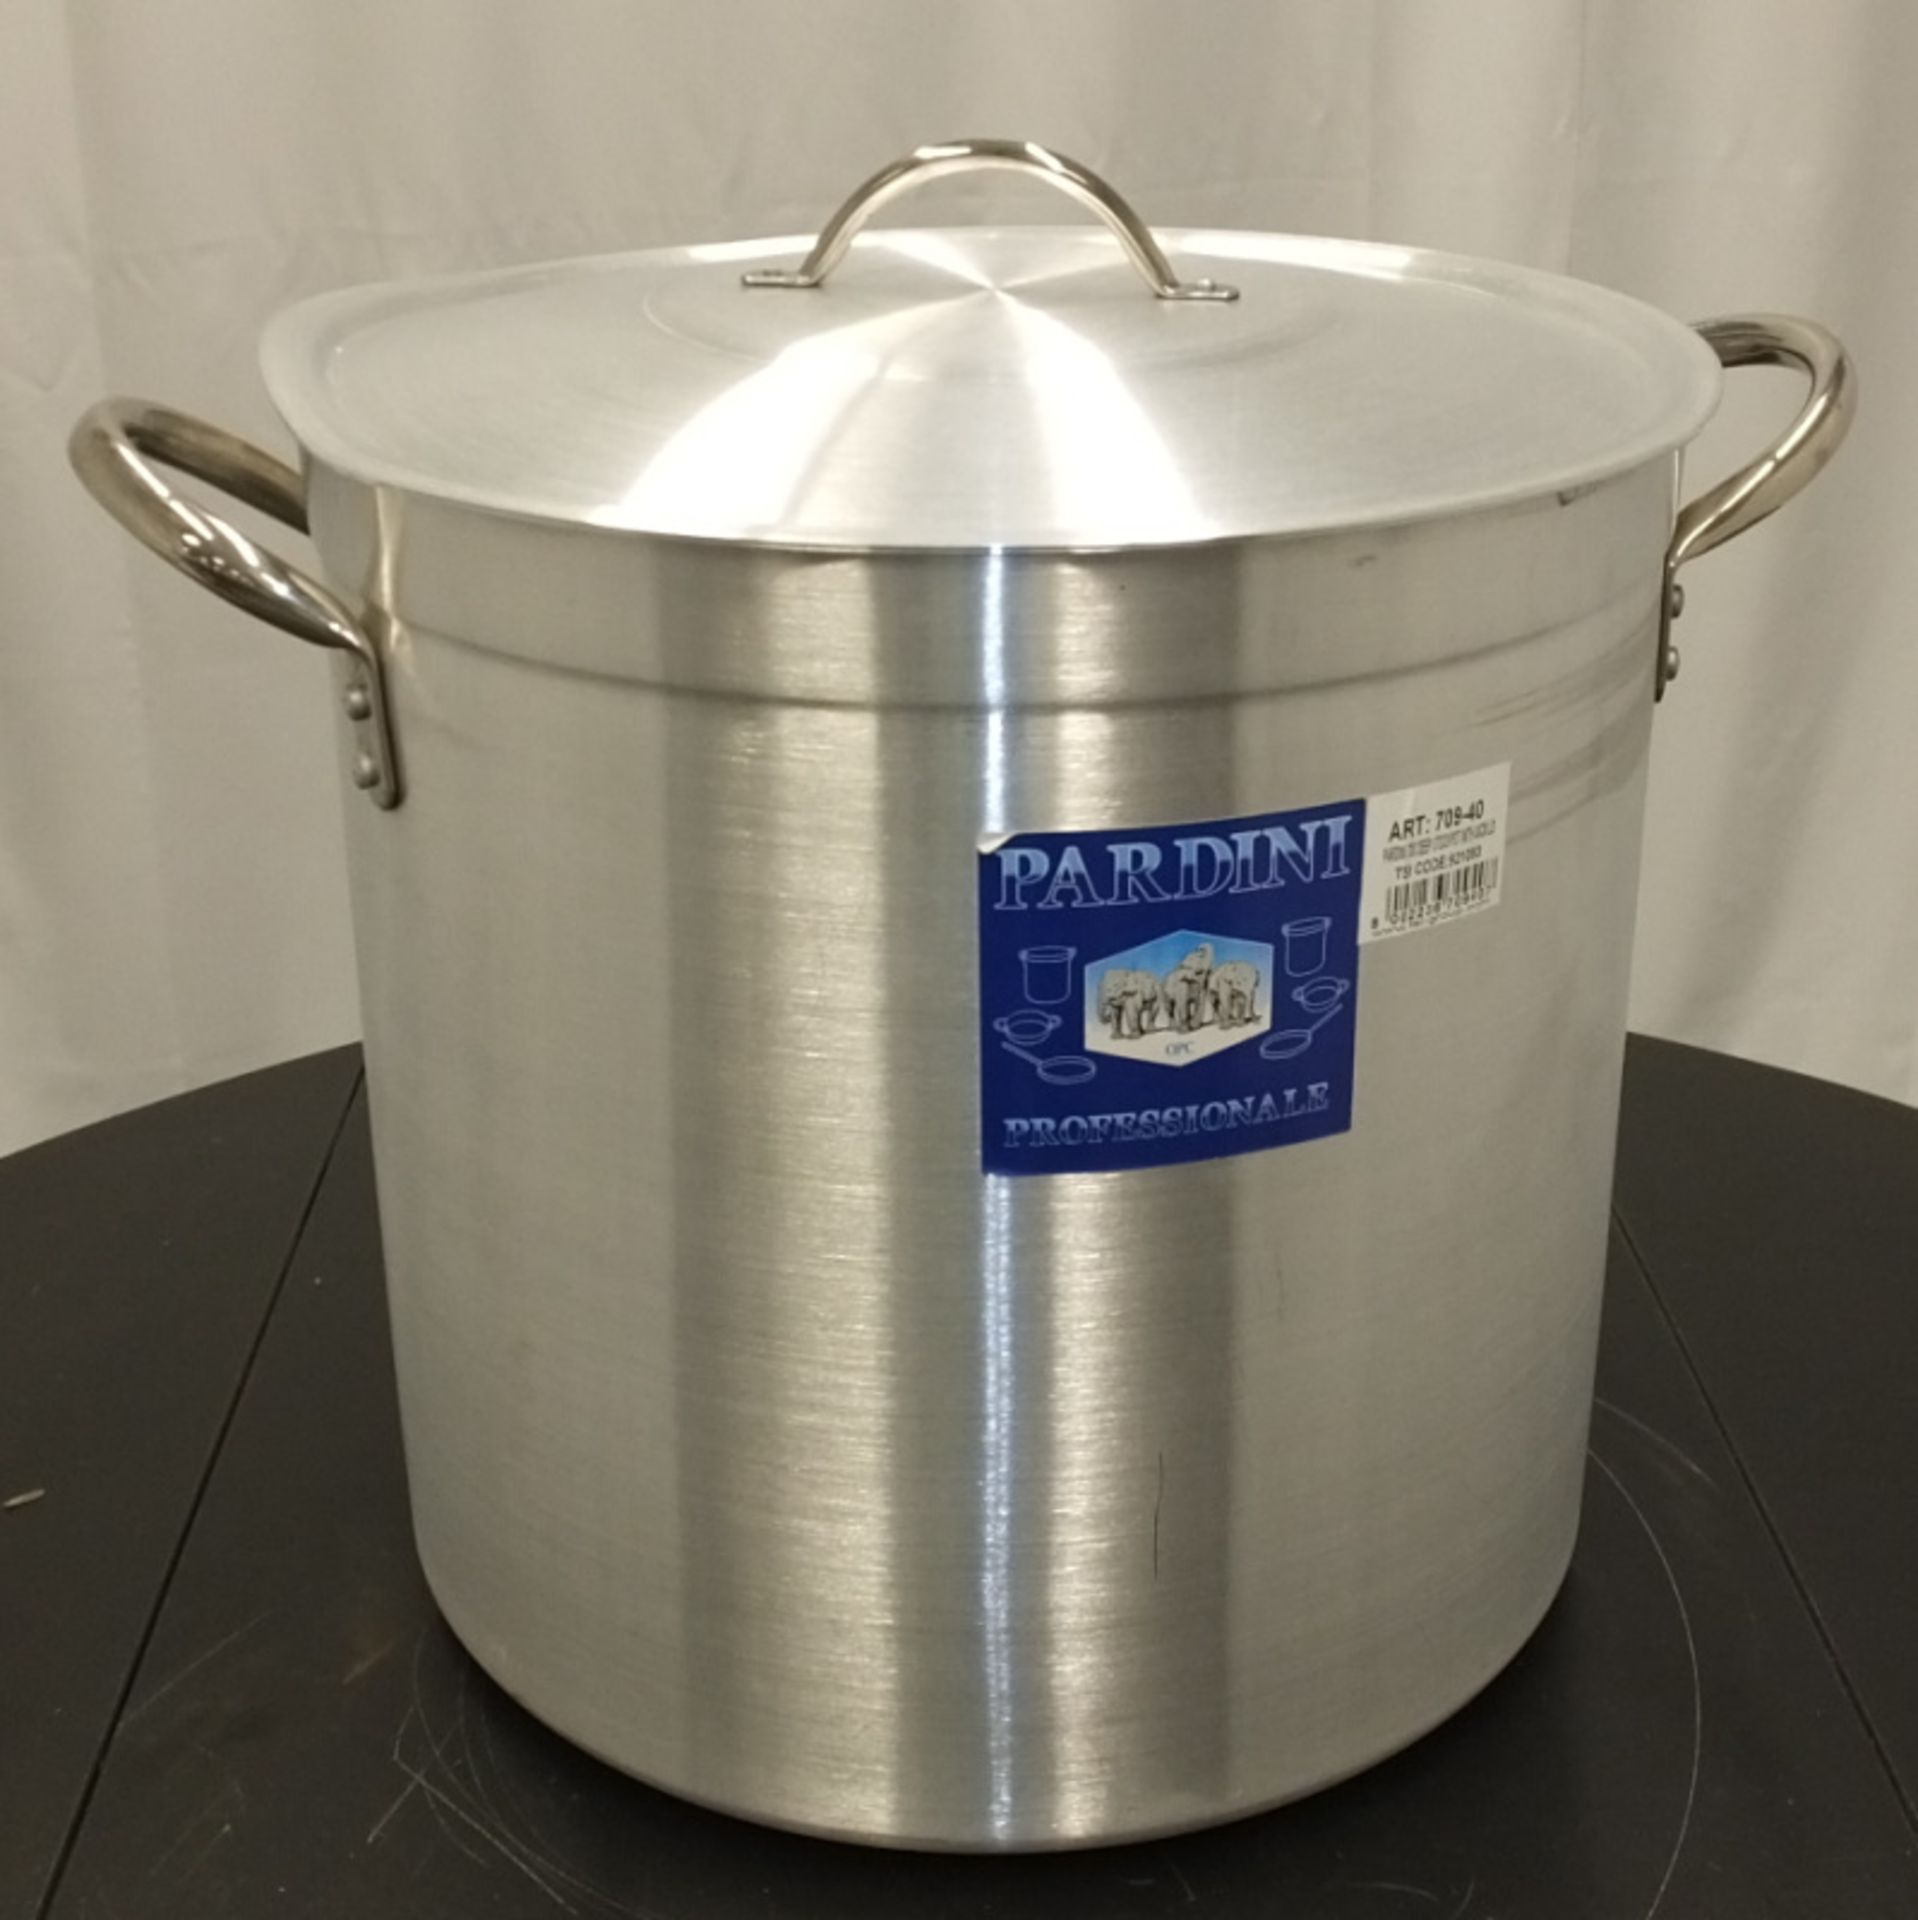 Pardini large cooking stock pots - 700mm deep x 40cm - bent lid - Image 2 of 2